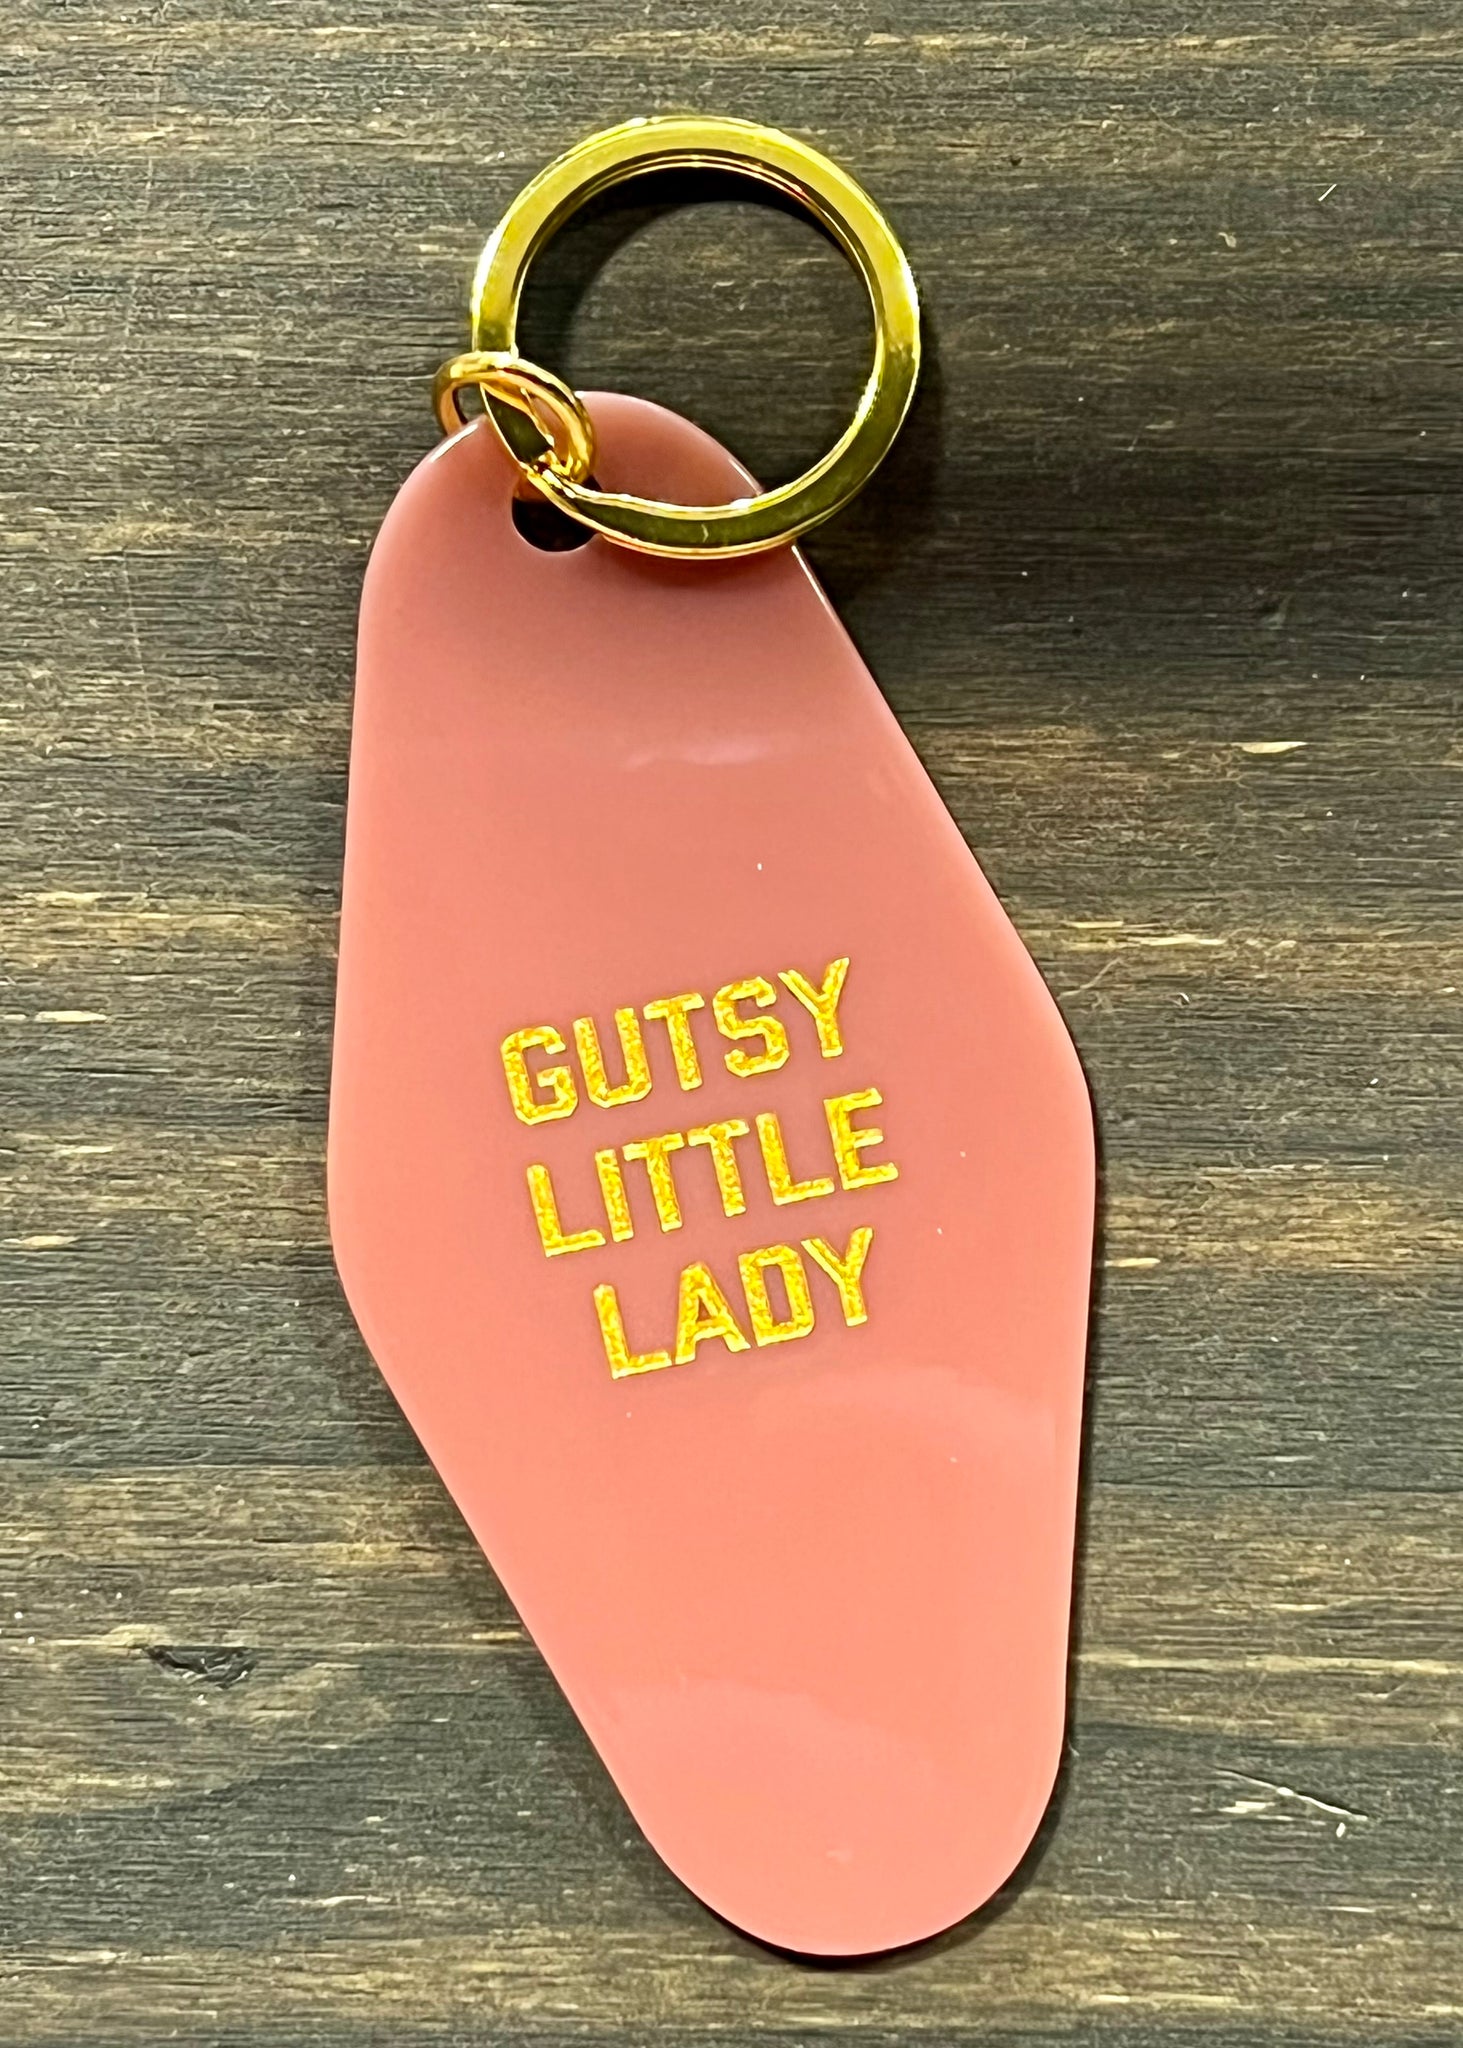 Gutsy Lady Keychain